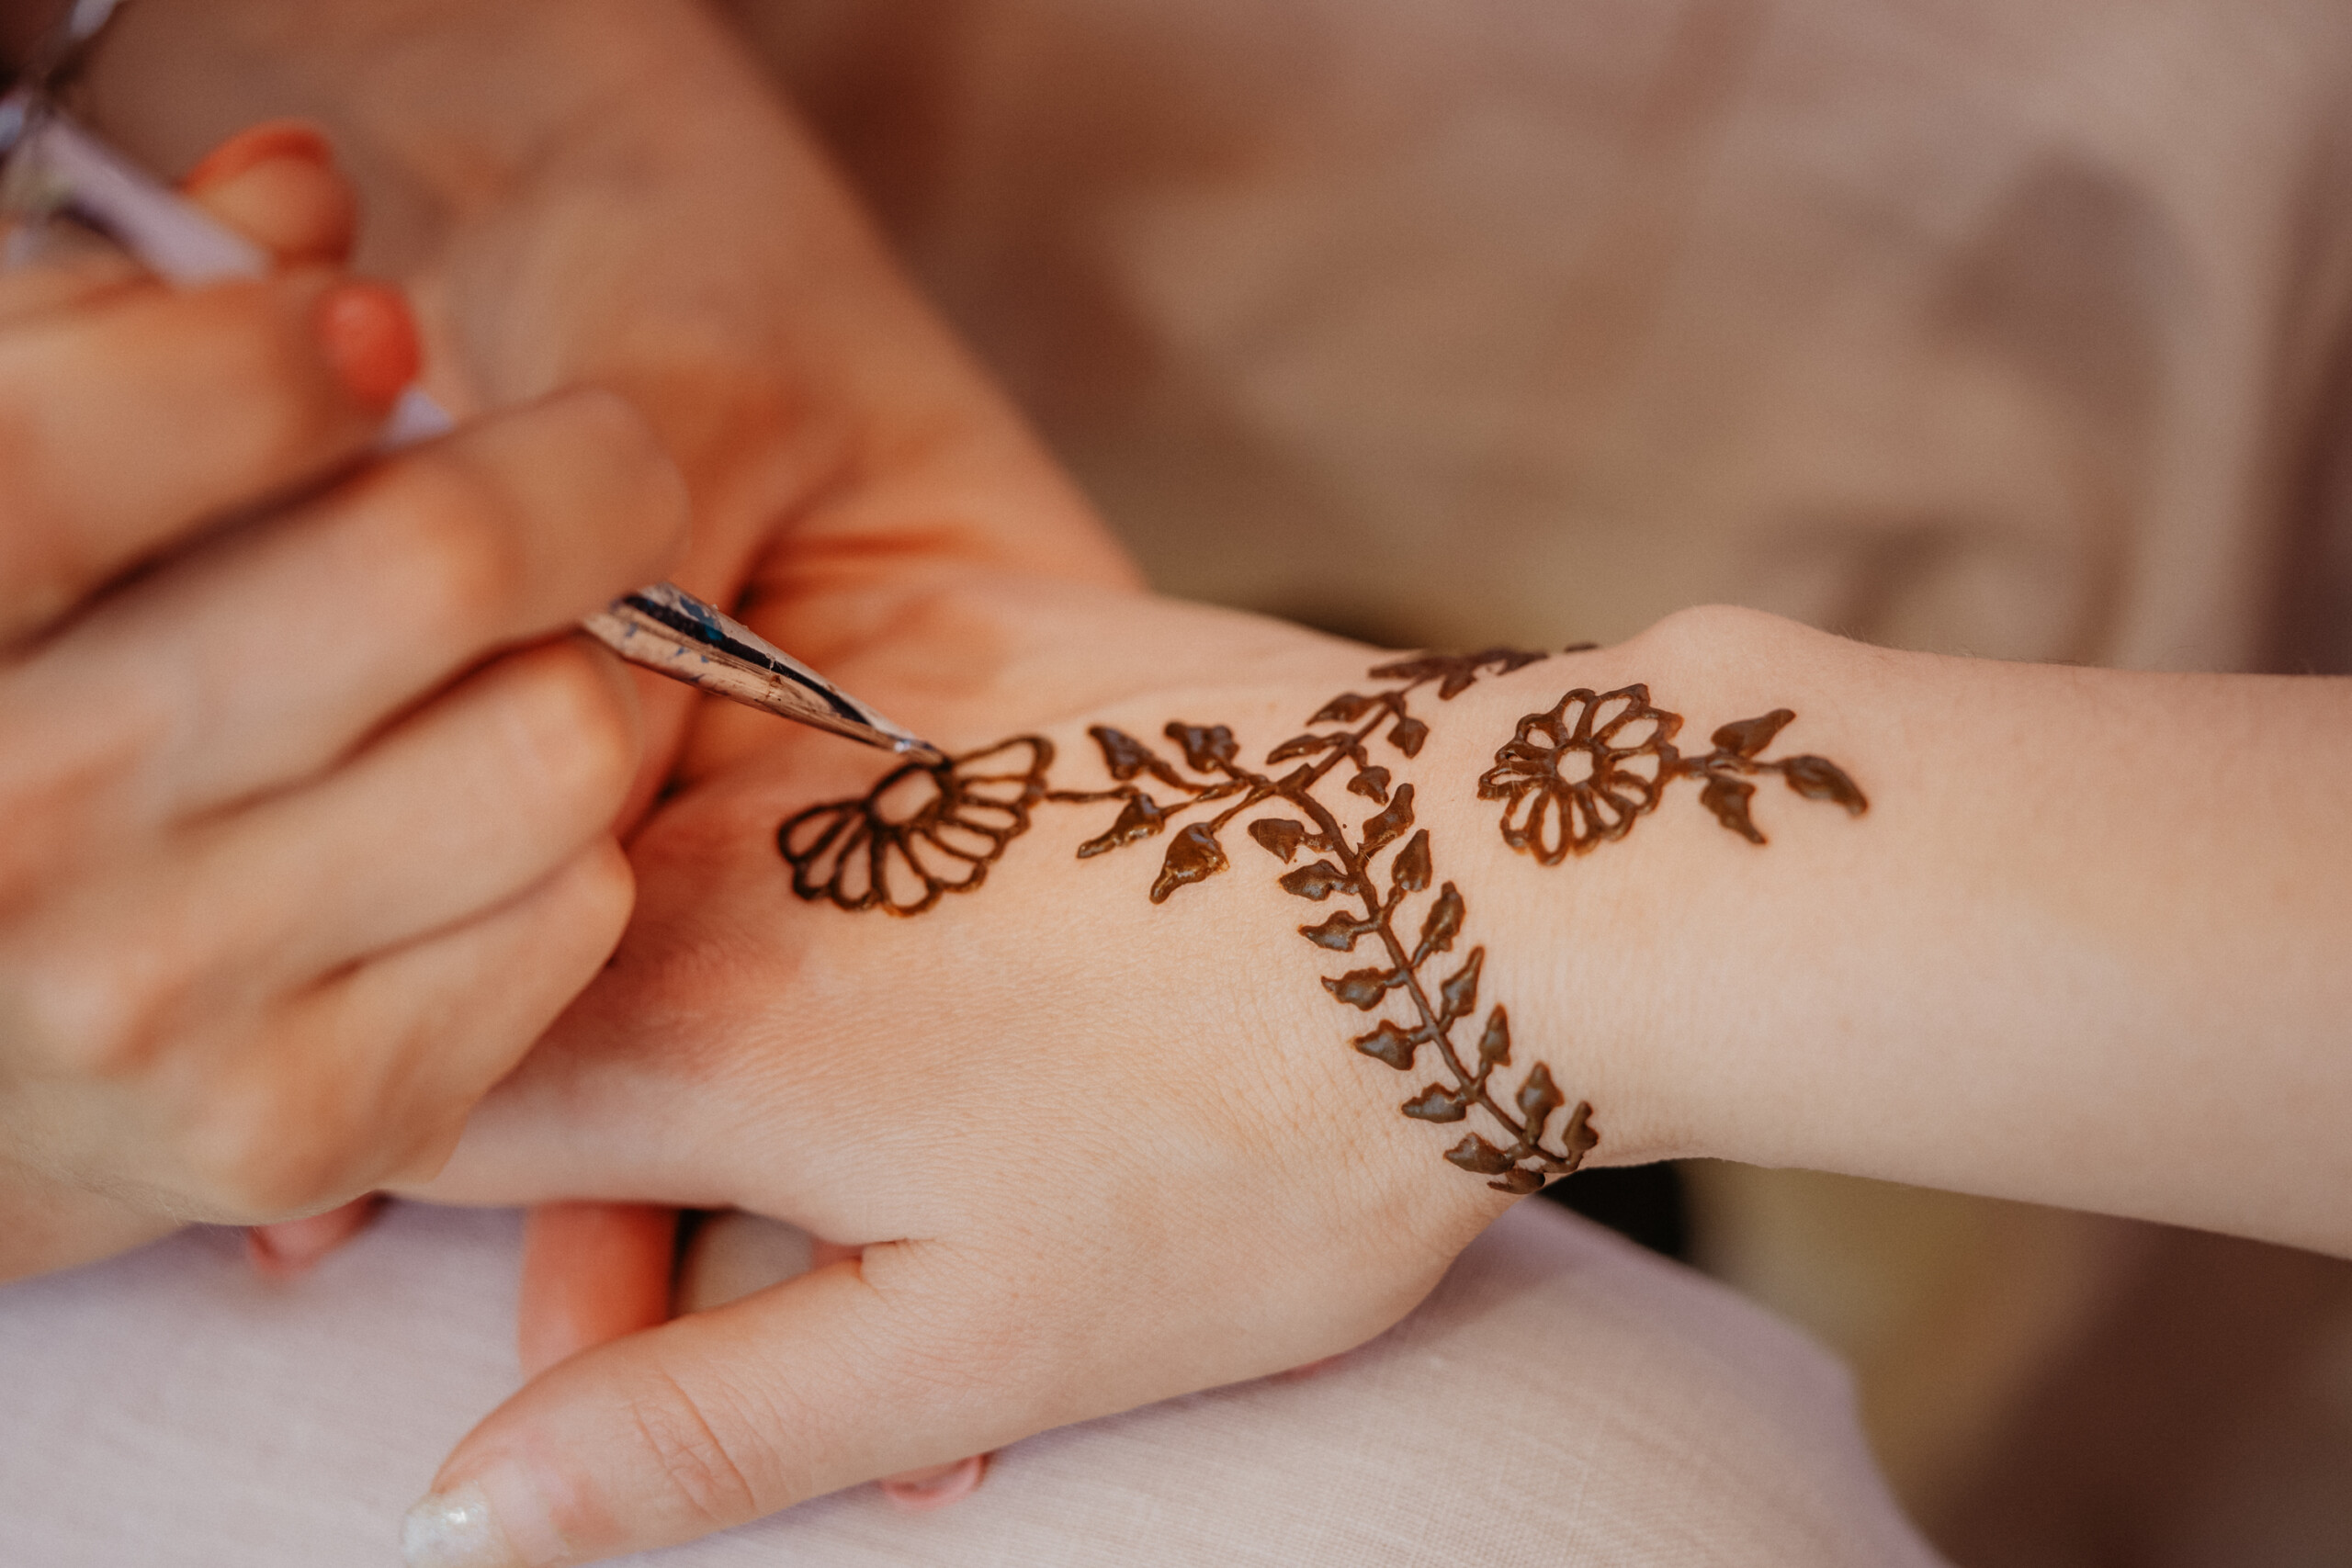 72 Impressive Henna Tattoo Designs For Fingers